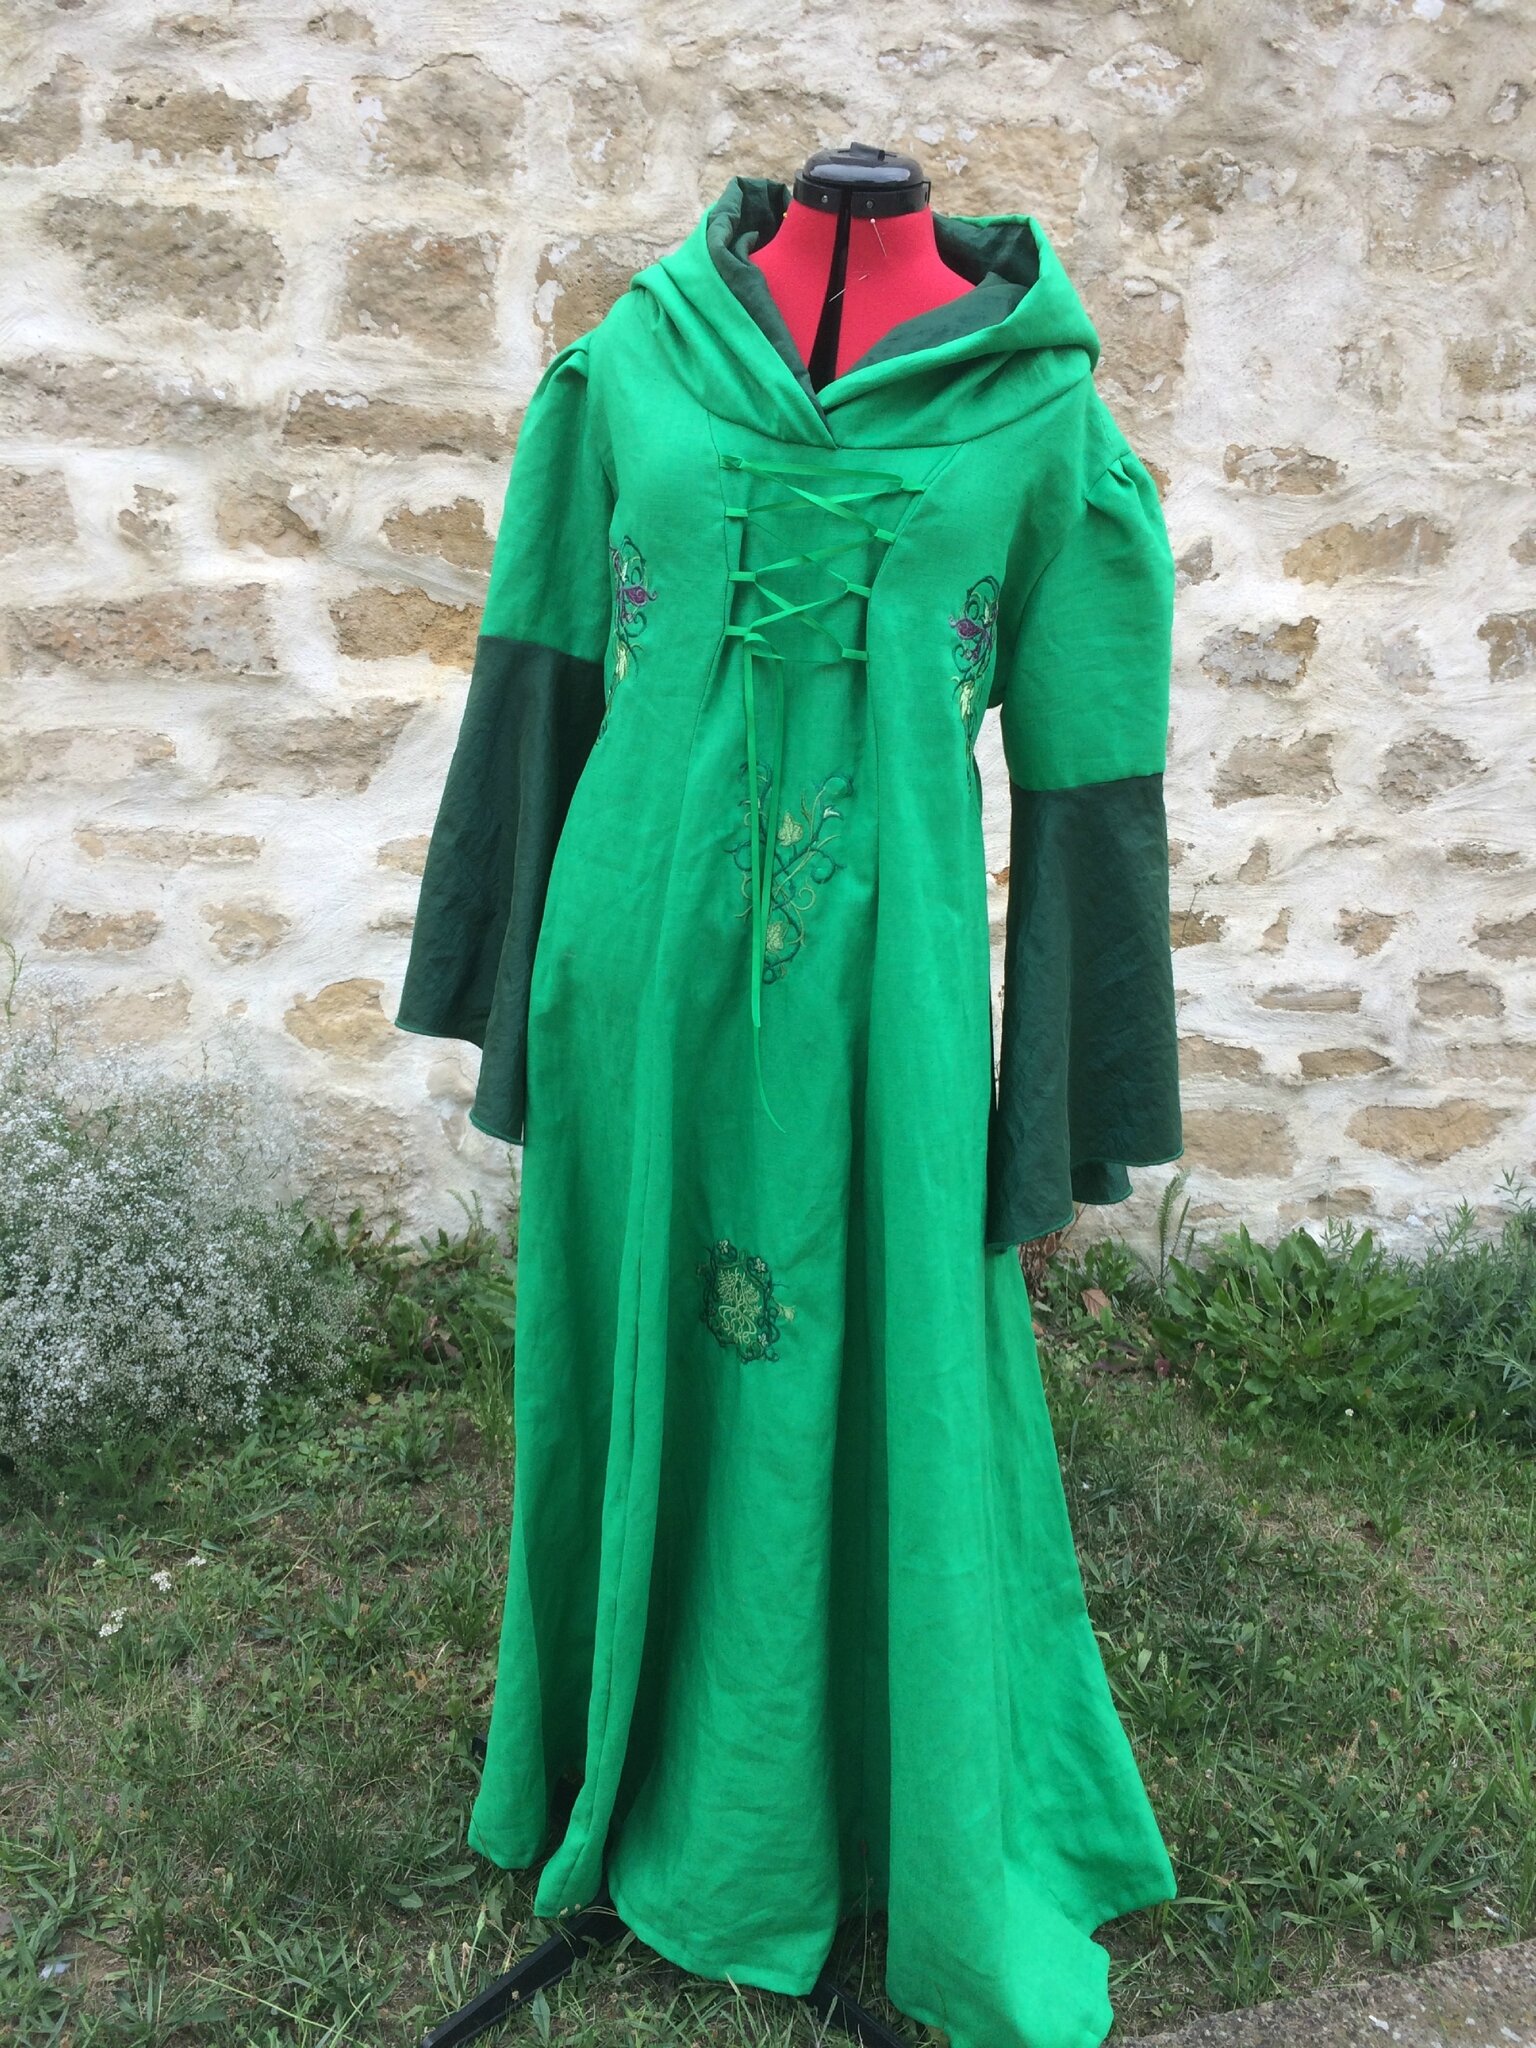 Robe médiévale verte avec broderies